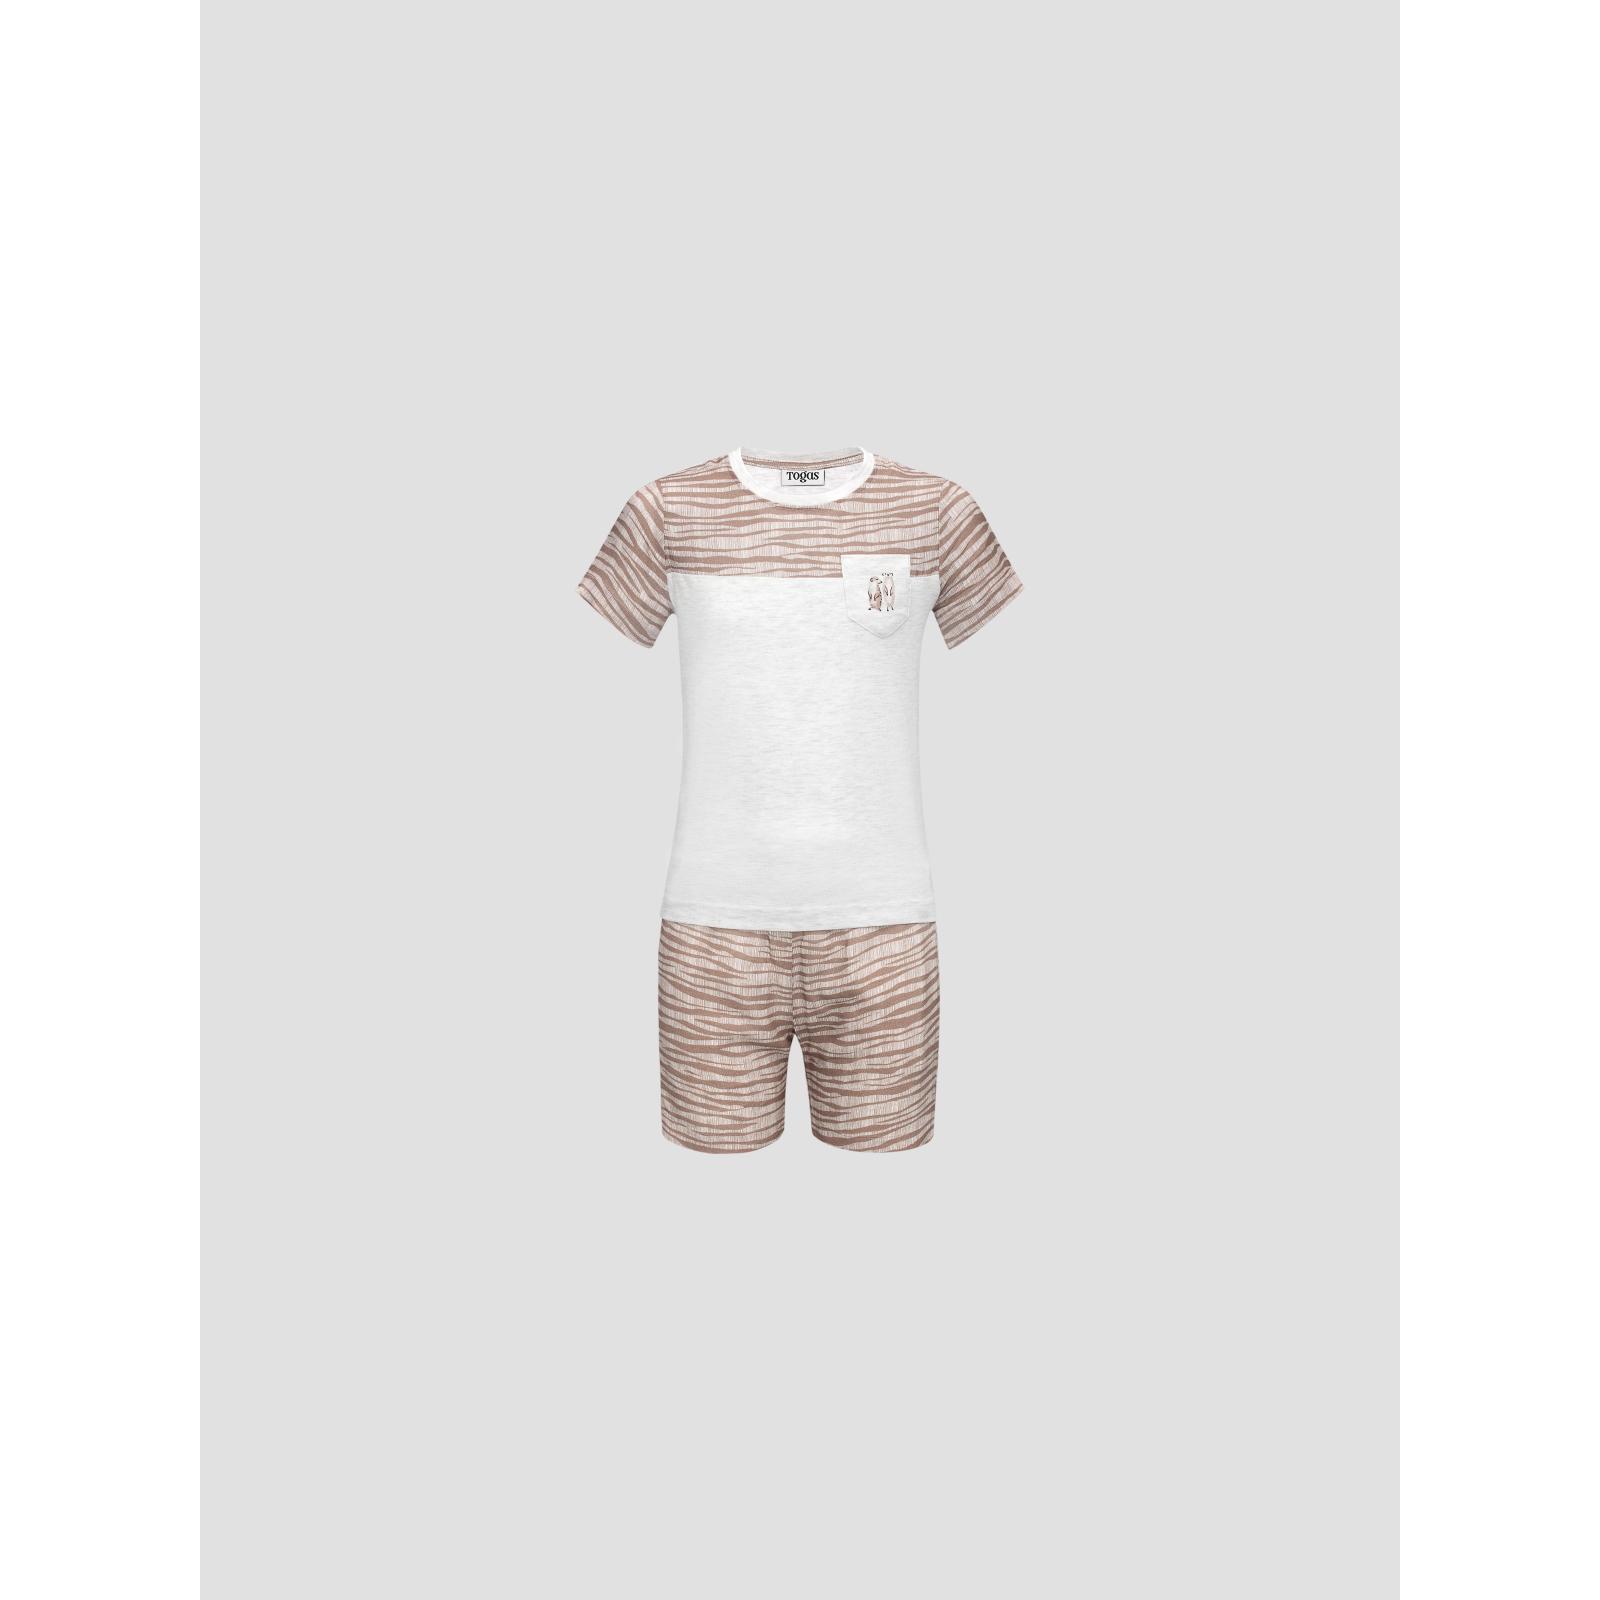 Пижама для мальчиков Kids by togas Сафари бежевый 116-122 см пижама сорочка шорты